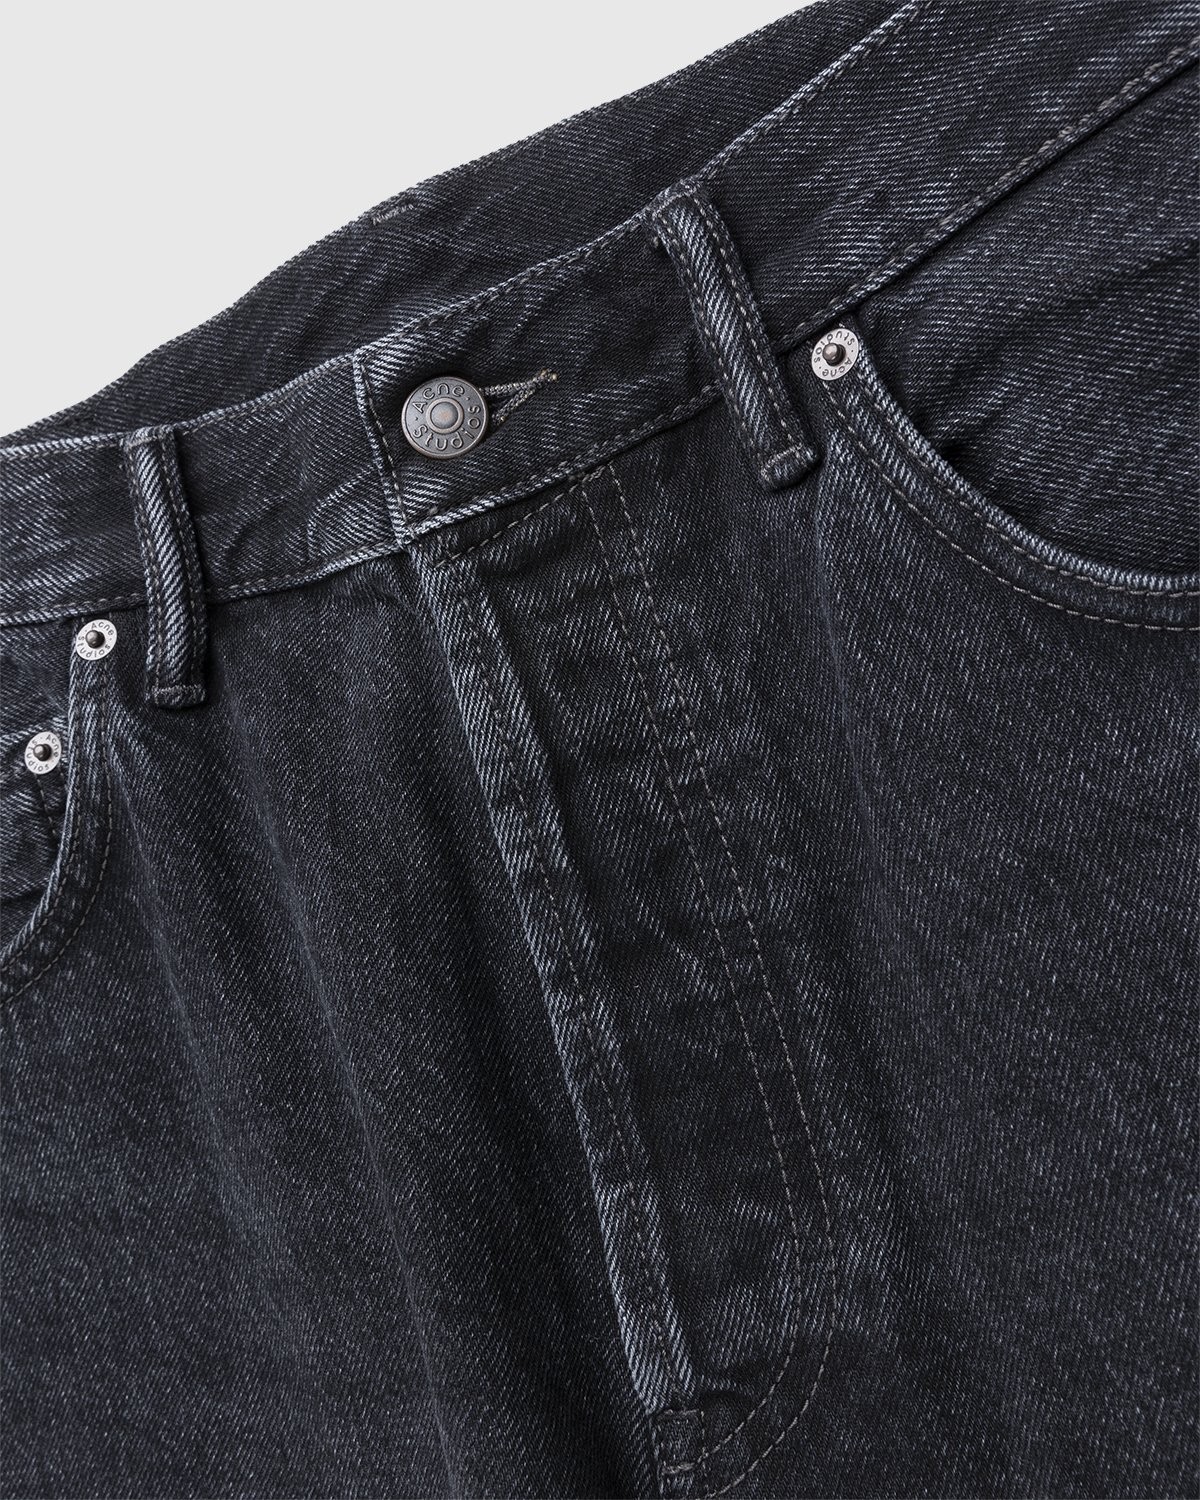 Acne Studios – Brutus 2021M Boot Cut Jeans Black | Highsnobiety Shop